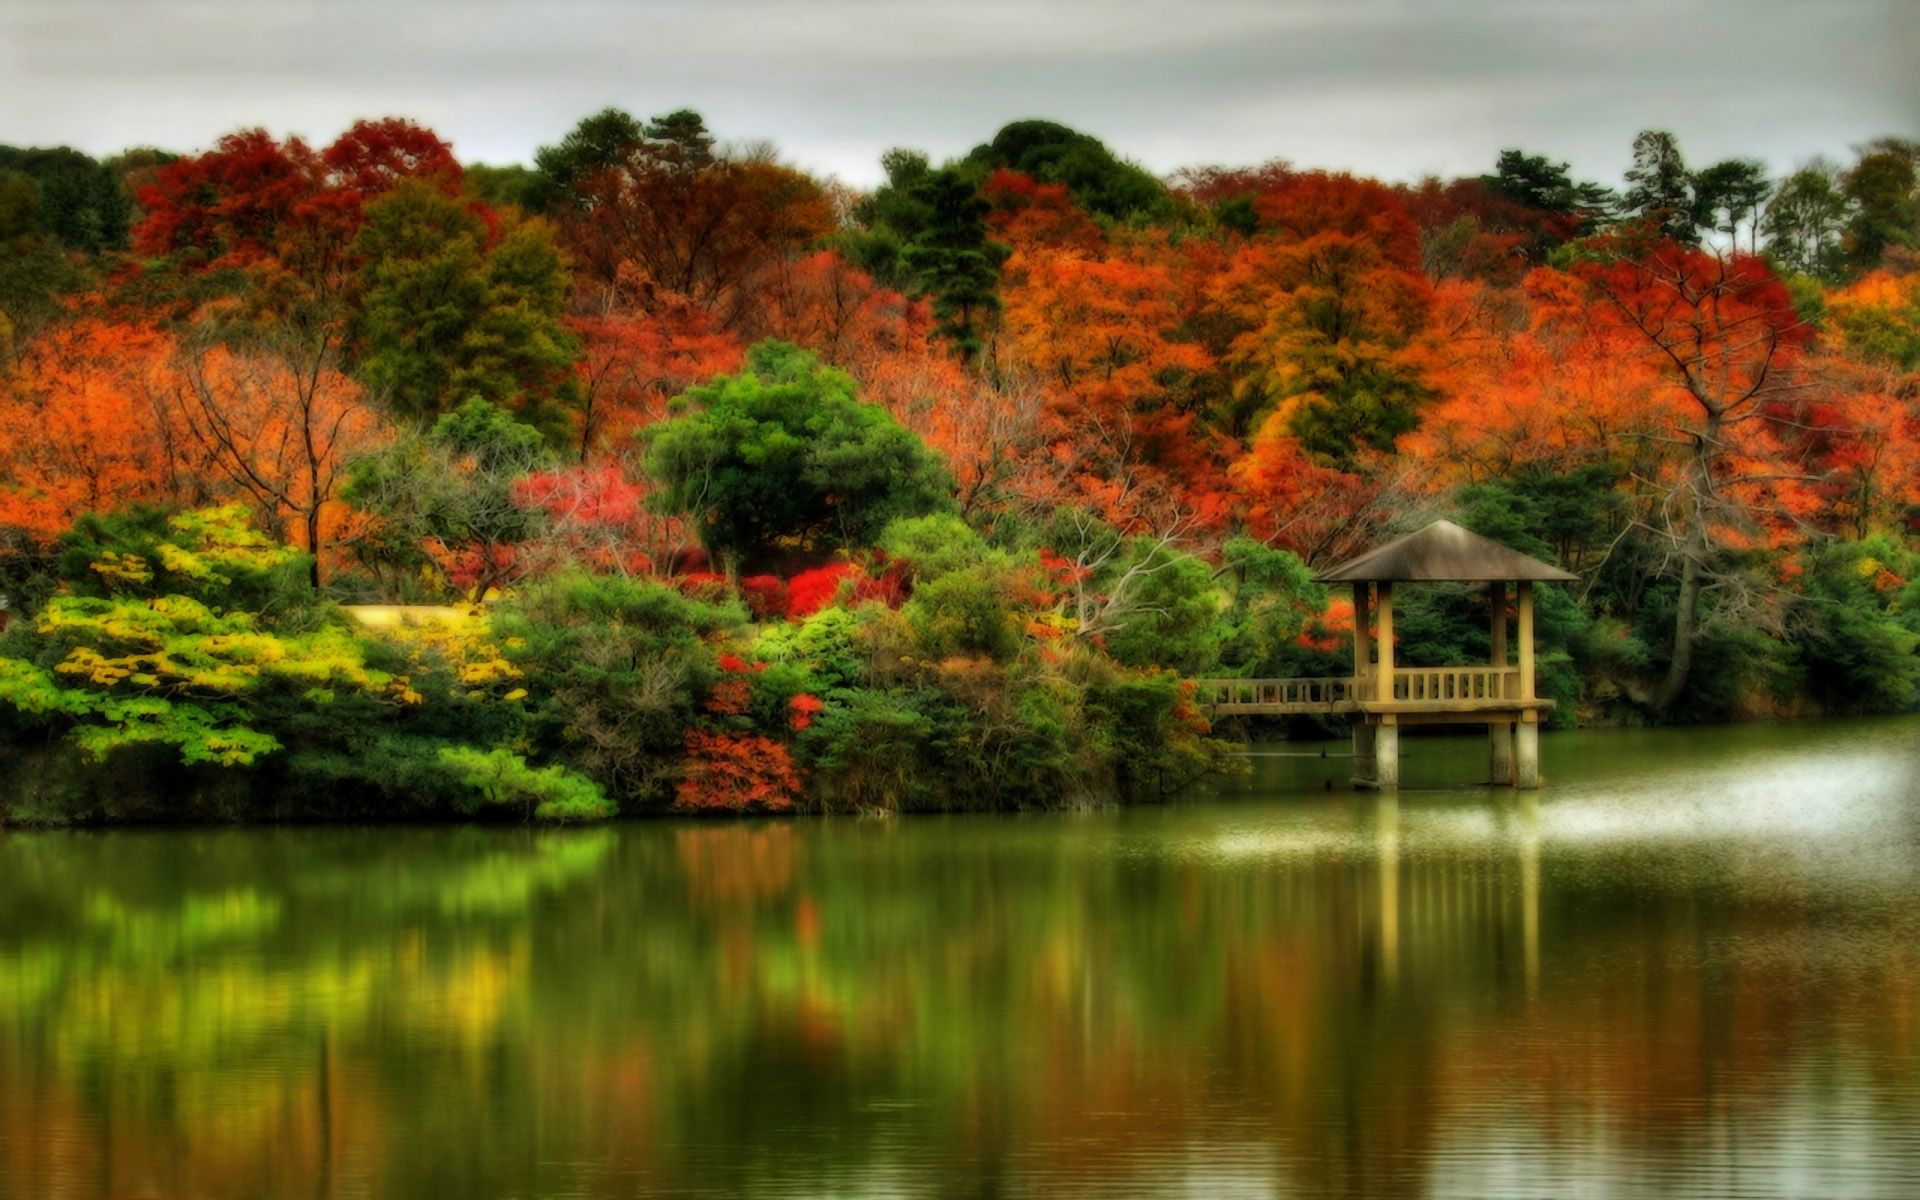 Autumn Scenes wallpaper. Autumn scenery, Fall scenery picture, Forest landscape